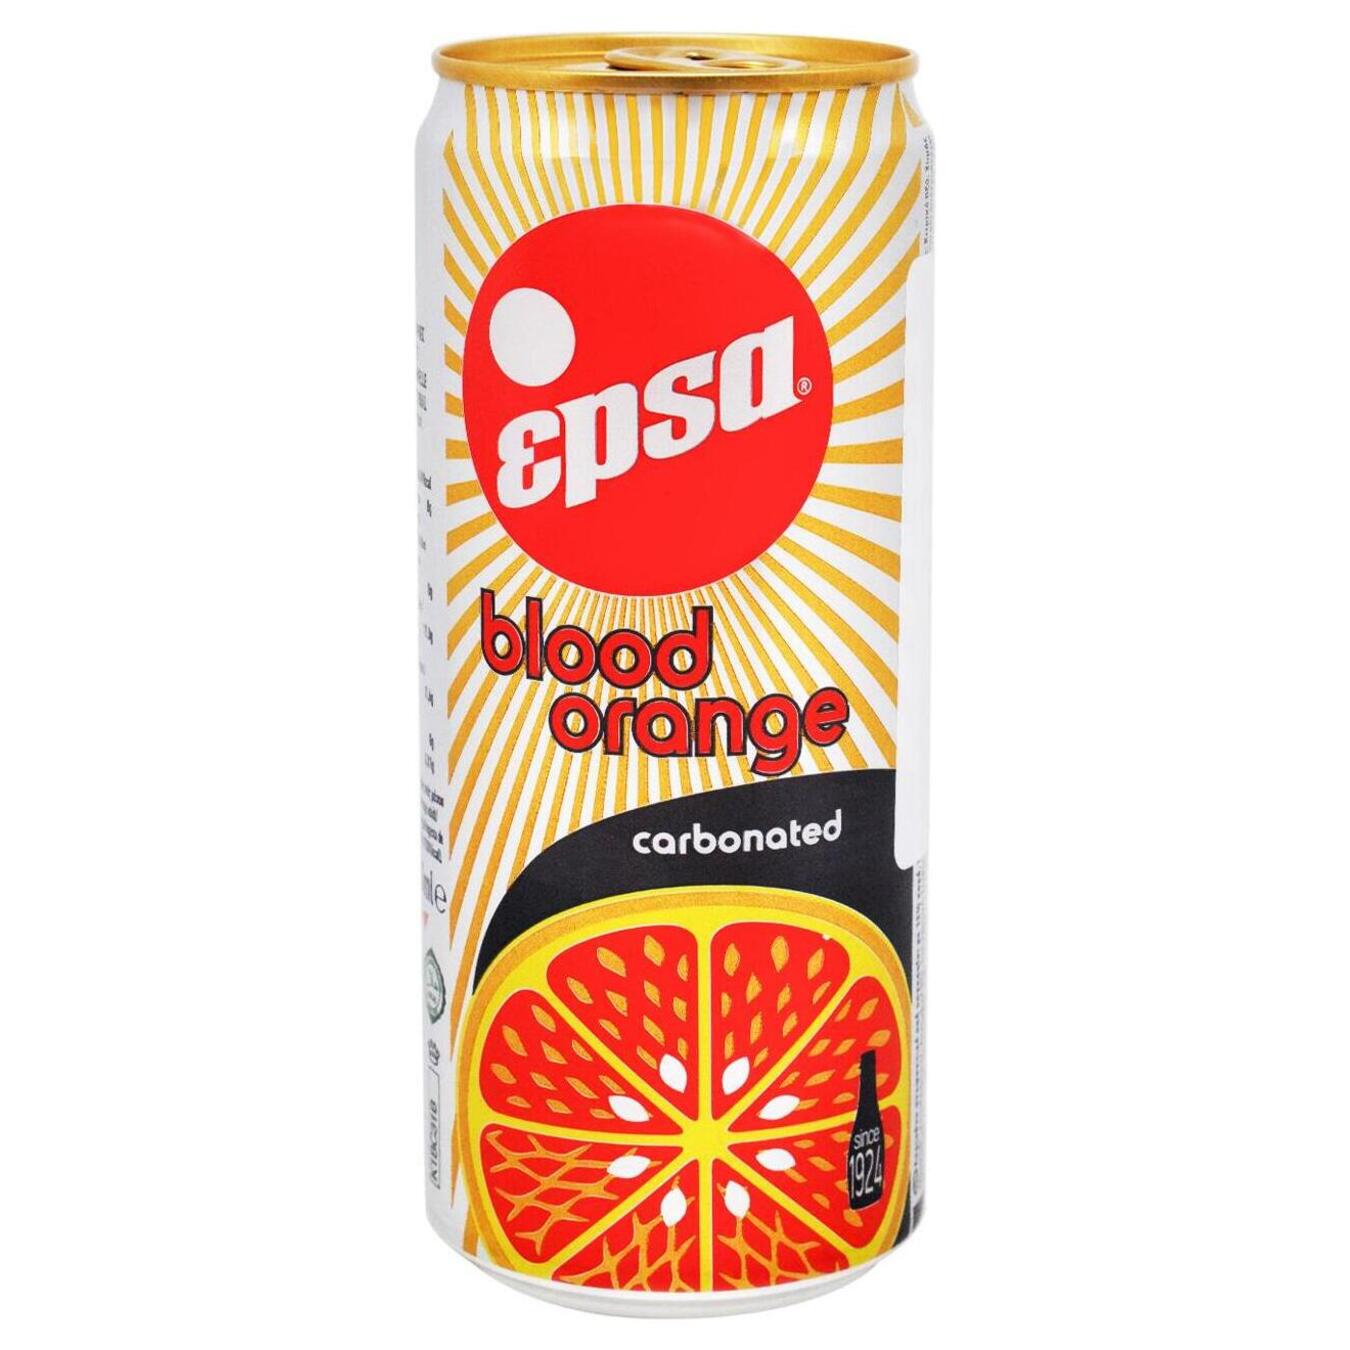 Carbonated drink Epsa Blood orange 0.33 l iron can